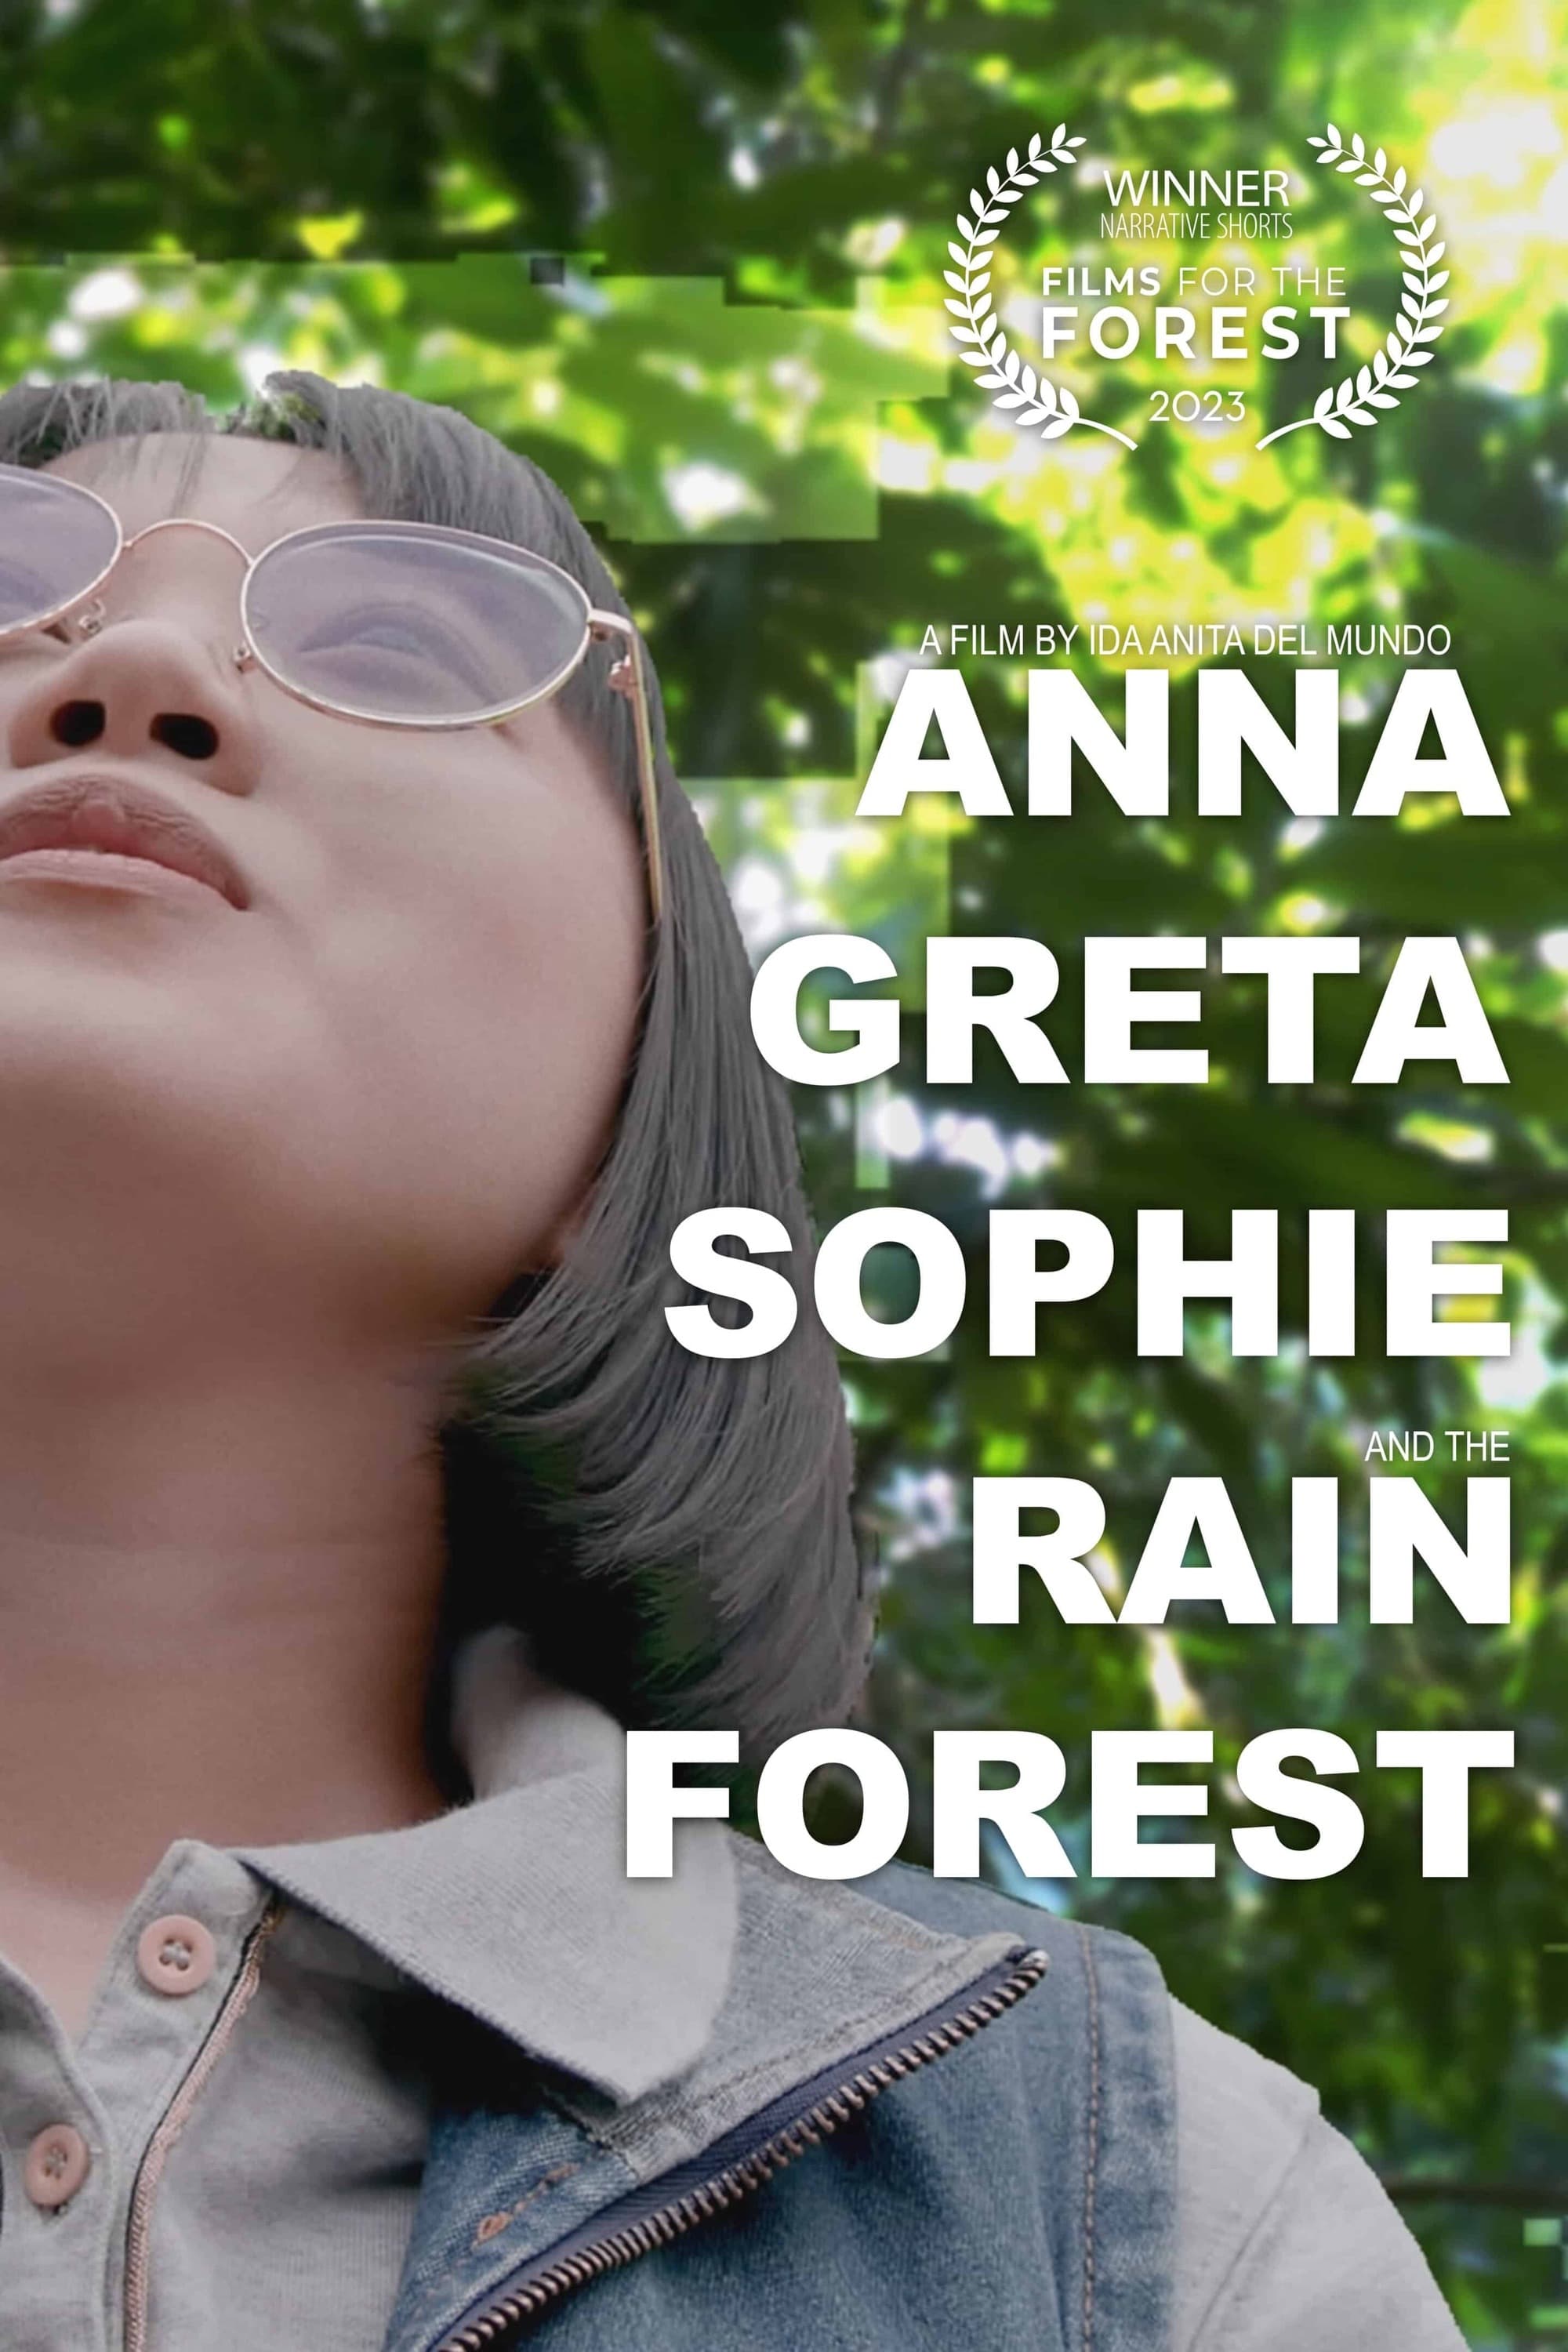 Anna, Greta, Sophie, and the Rainforest